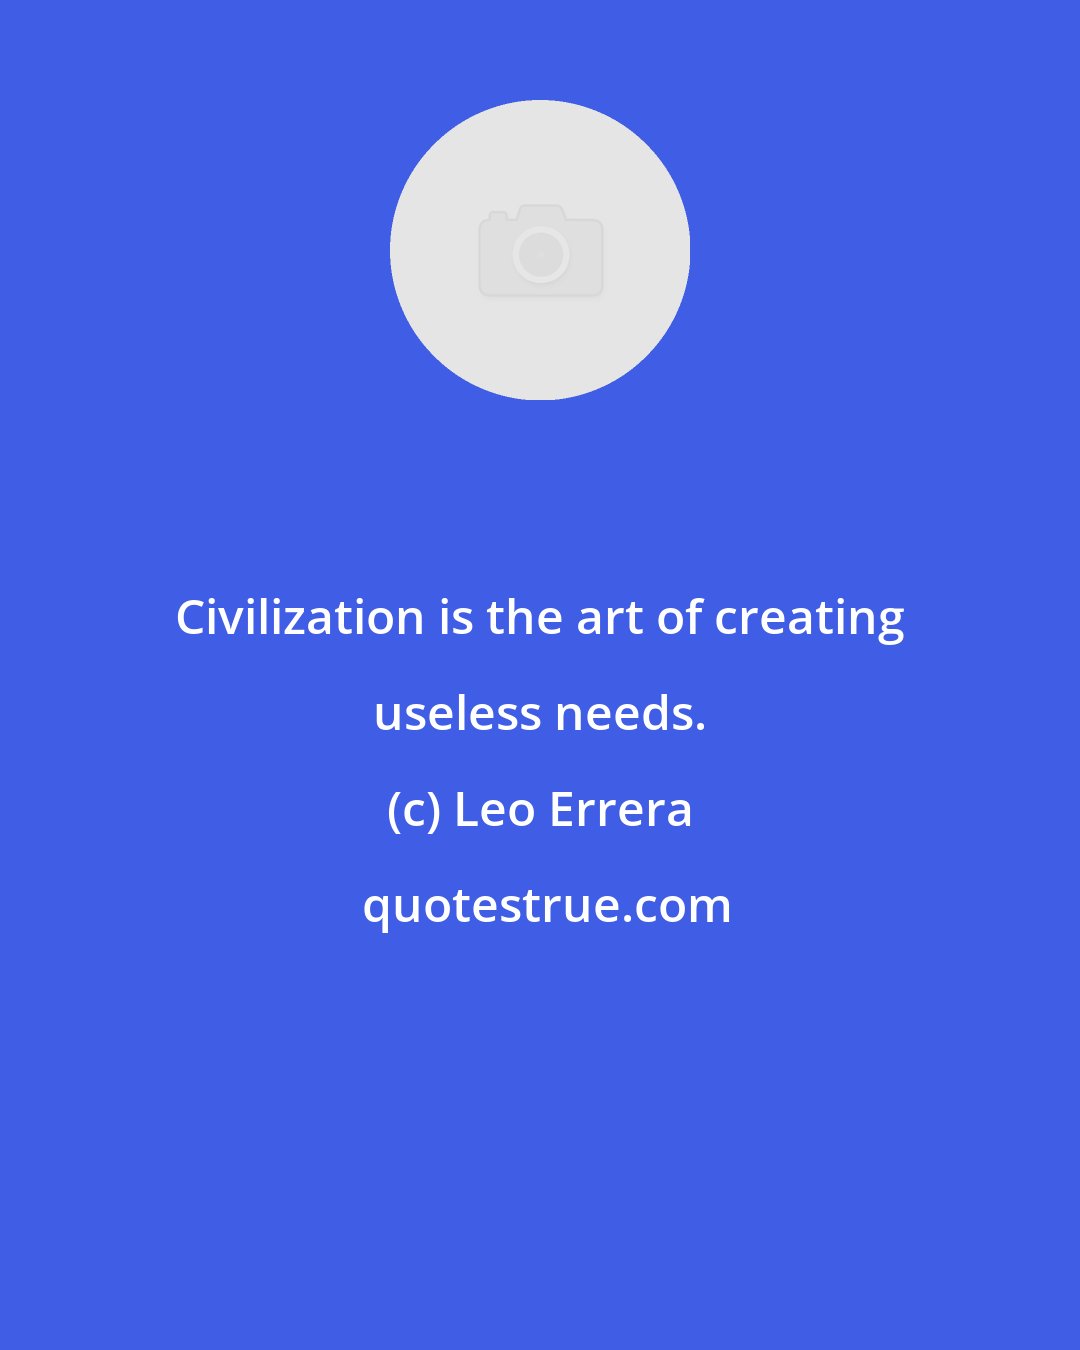 Leo Errera: Civilization is the art of creating useless needs.